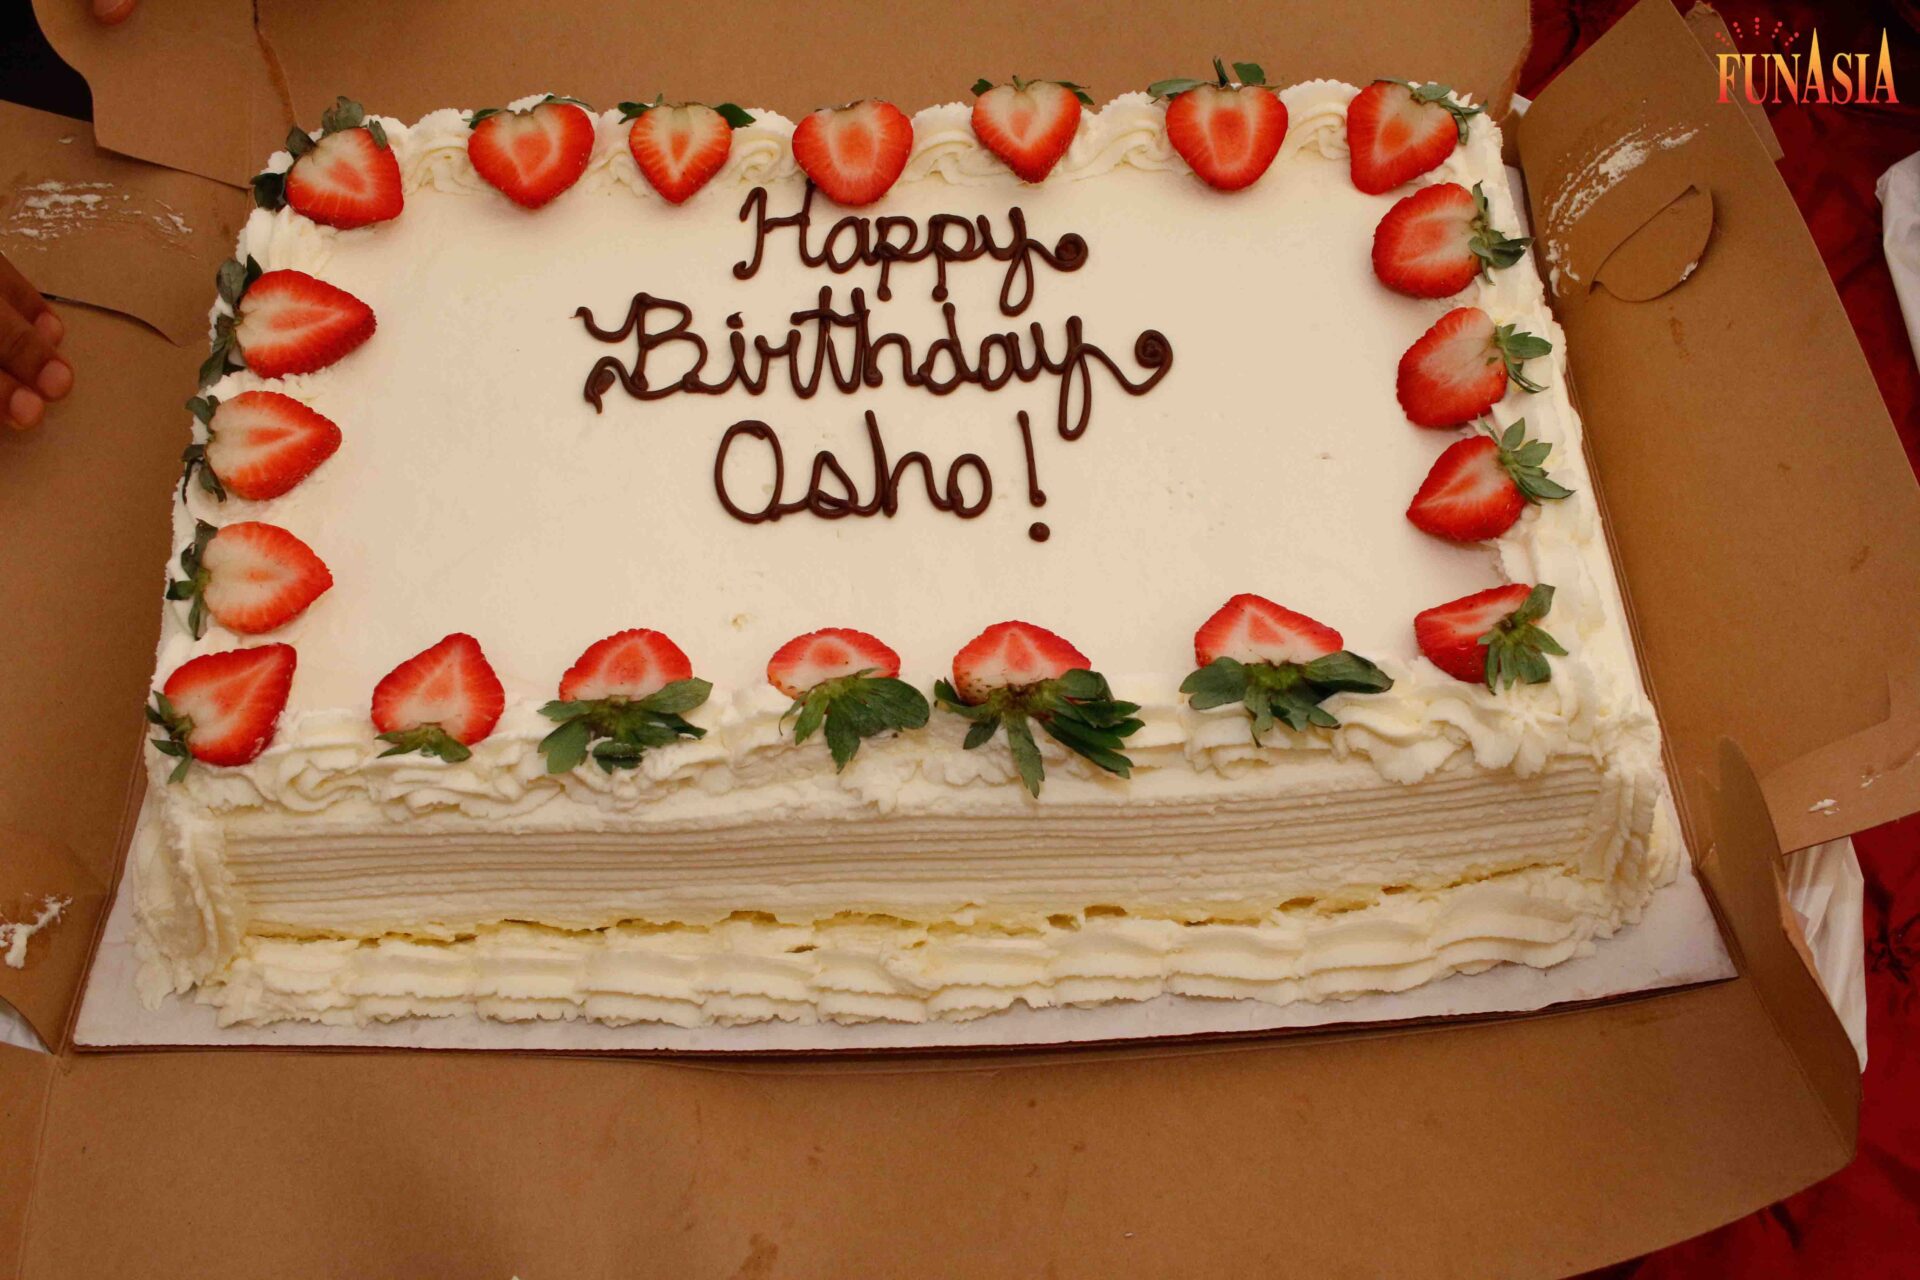 Osho’s Birthday Event